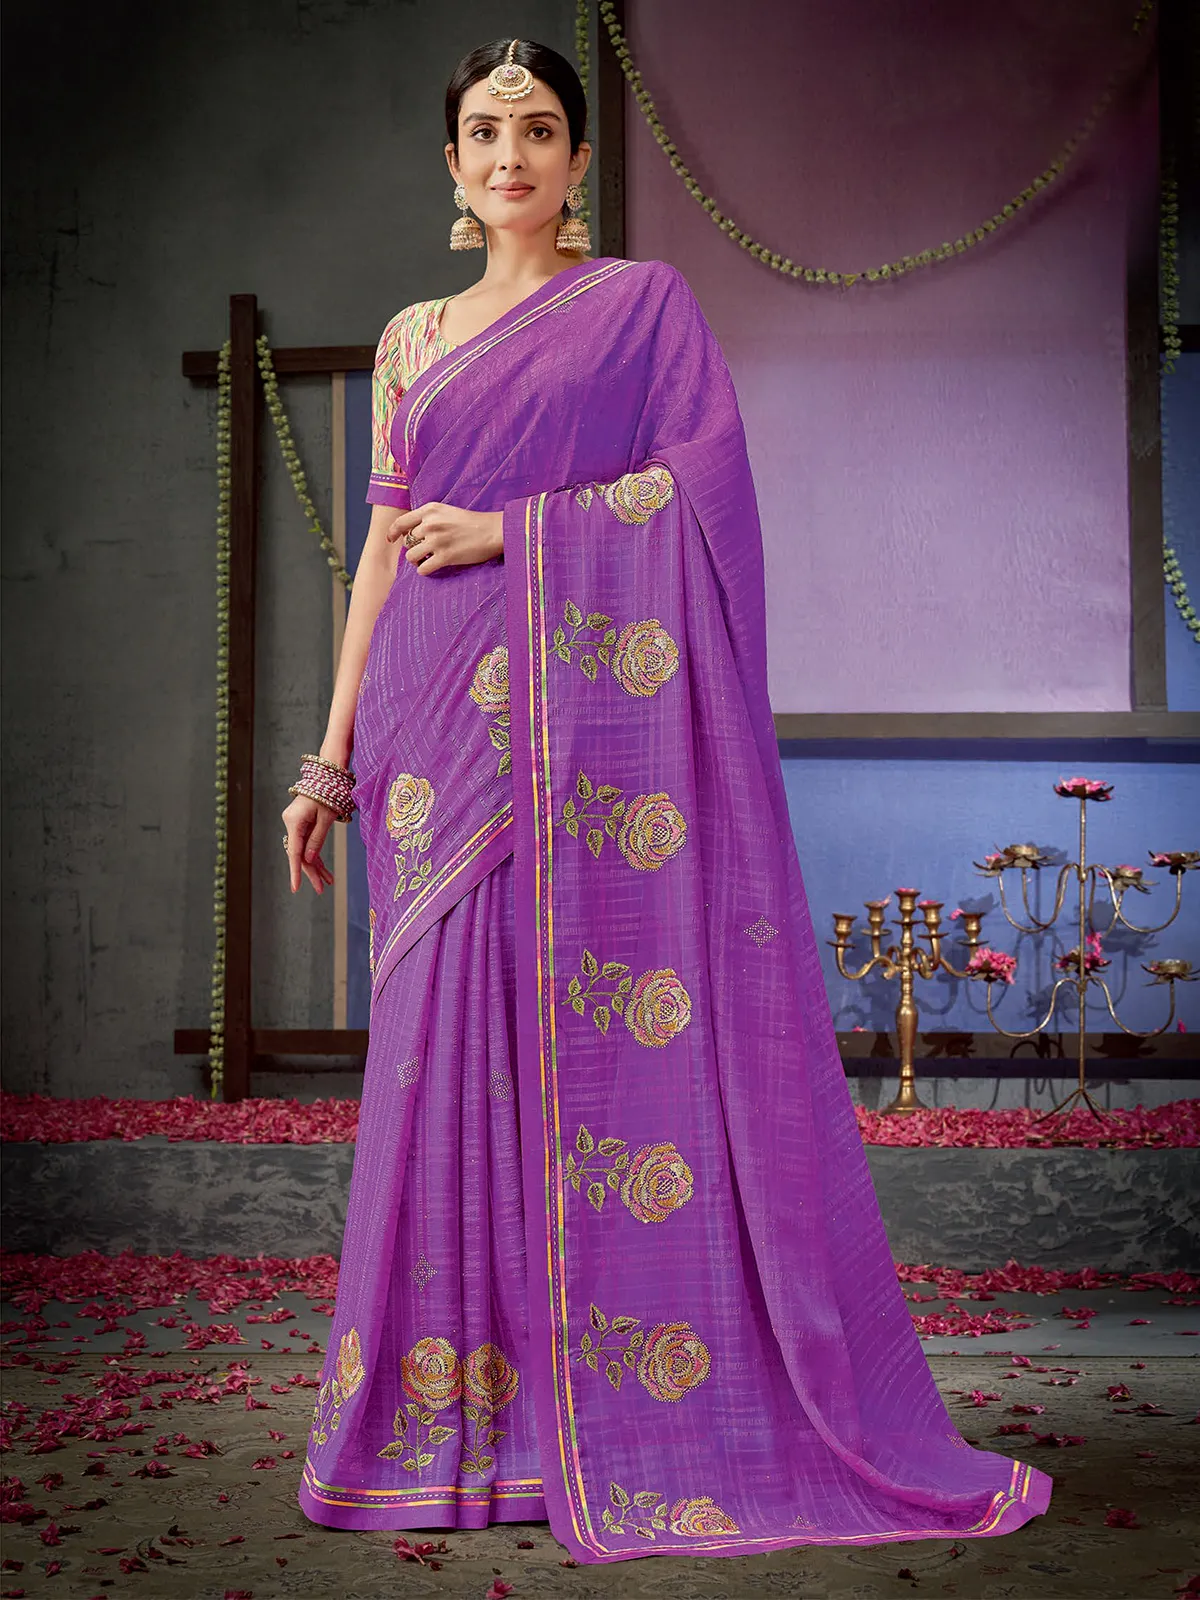 Beautiful purple floral embroidery saree